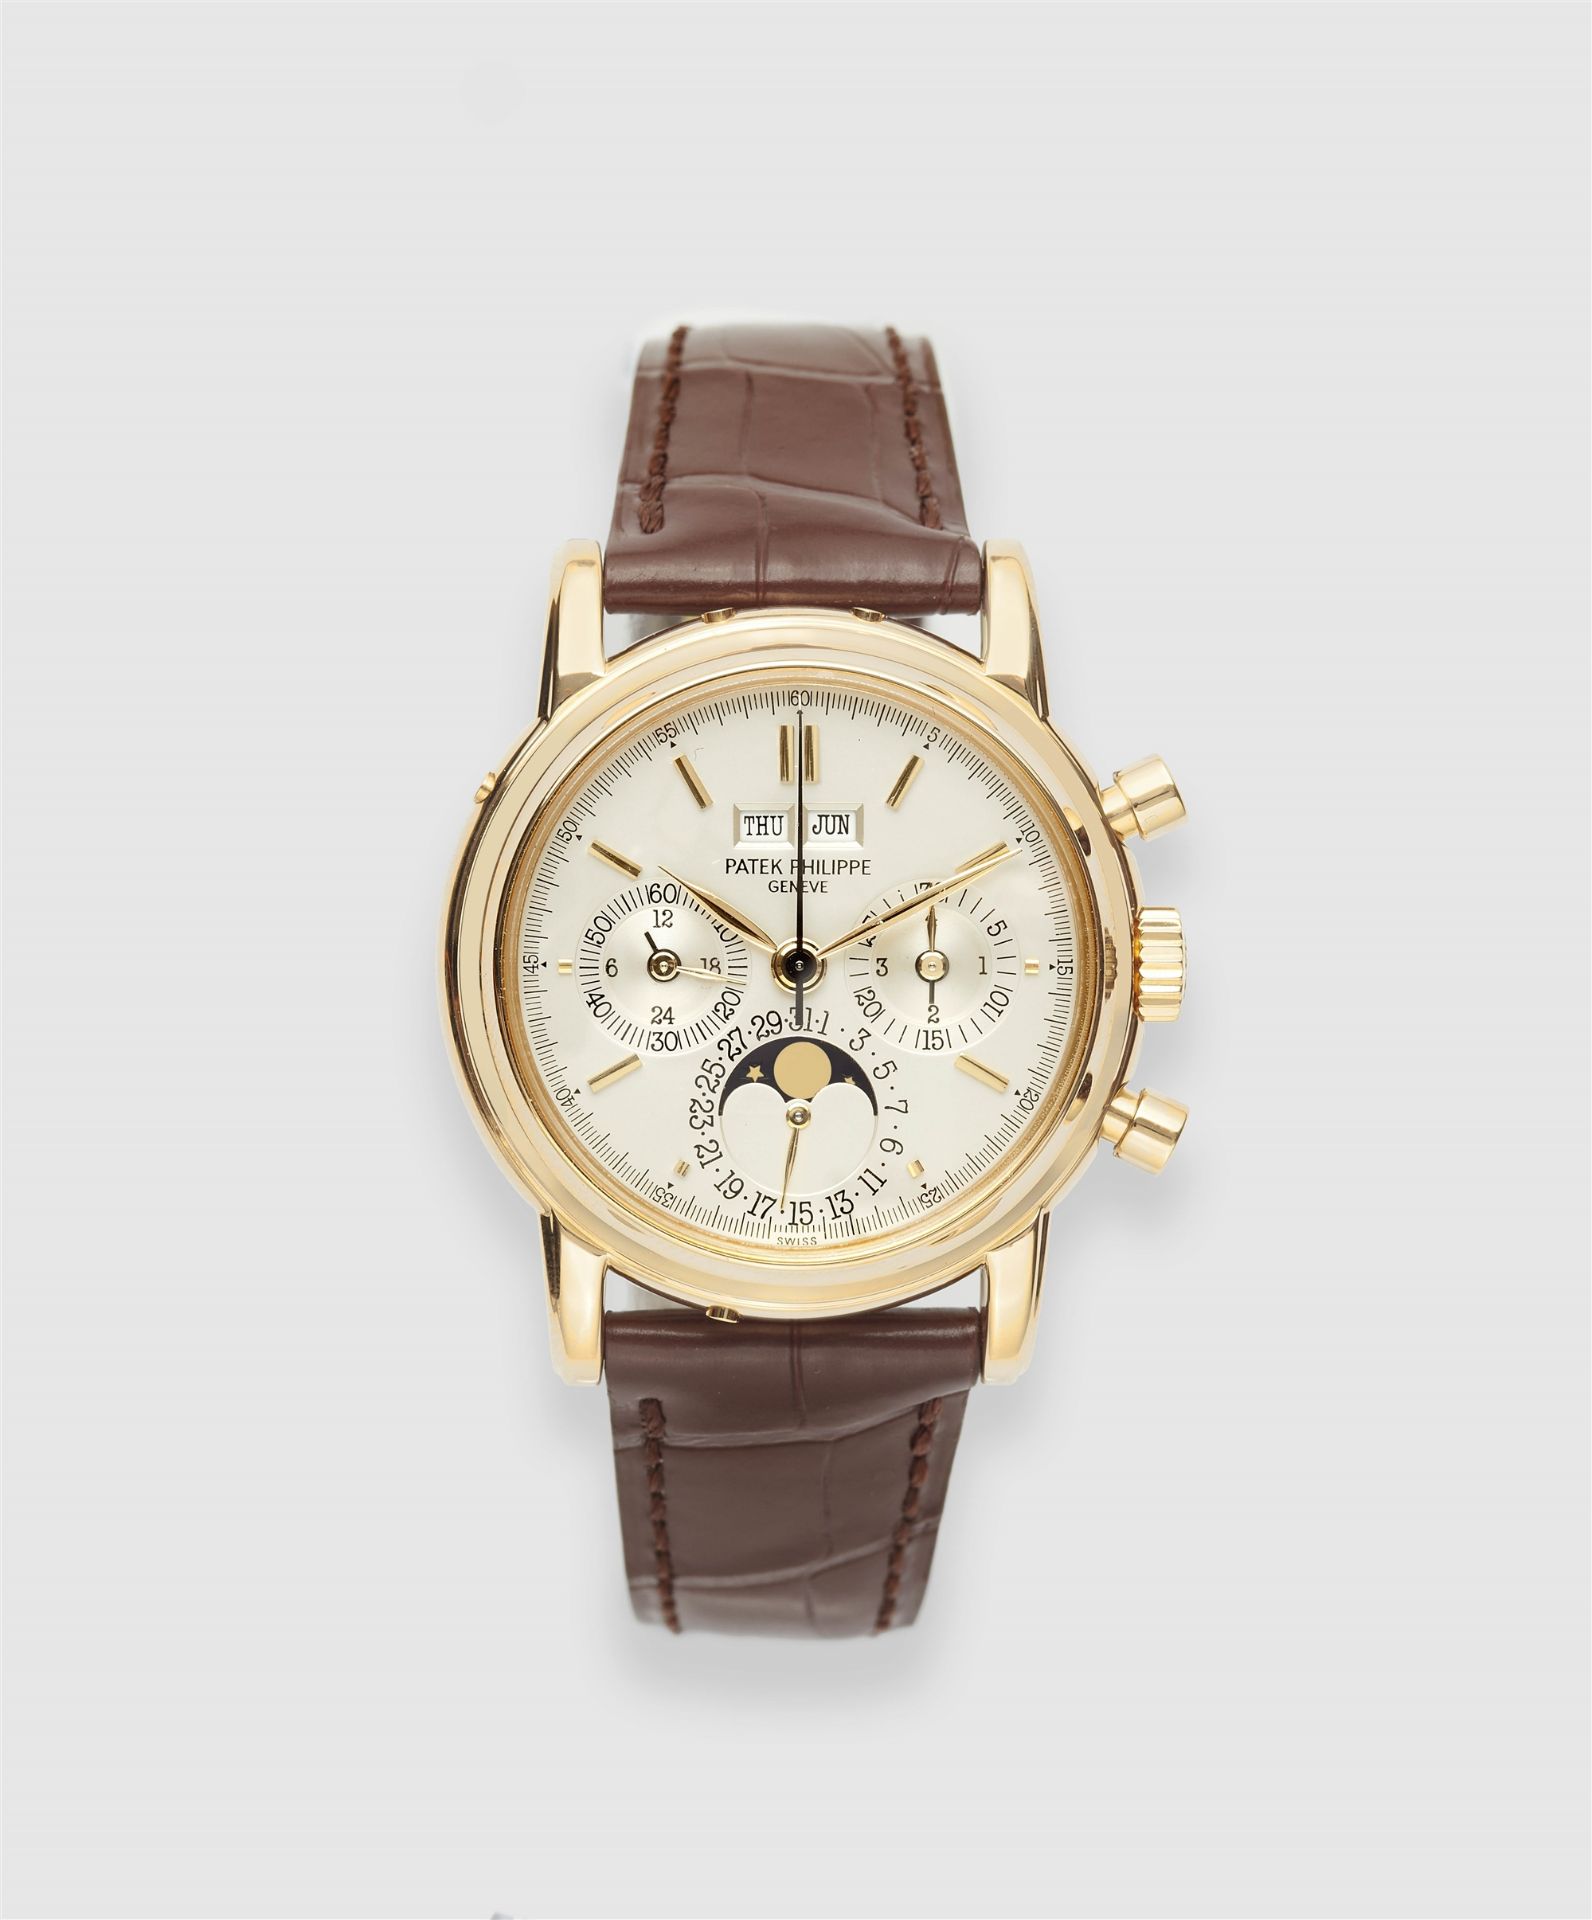 An extremely rare 18k Patek Philippe ref. 3971 gentelman's wristwatch.